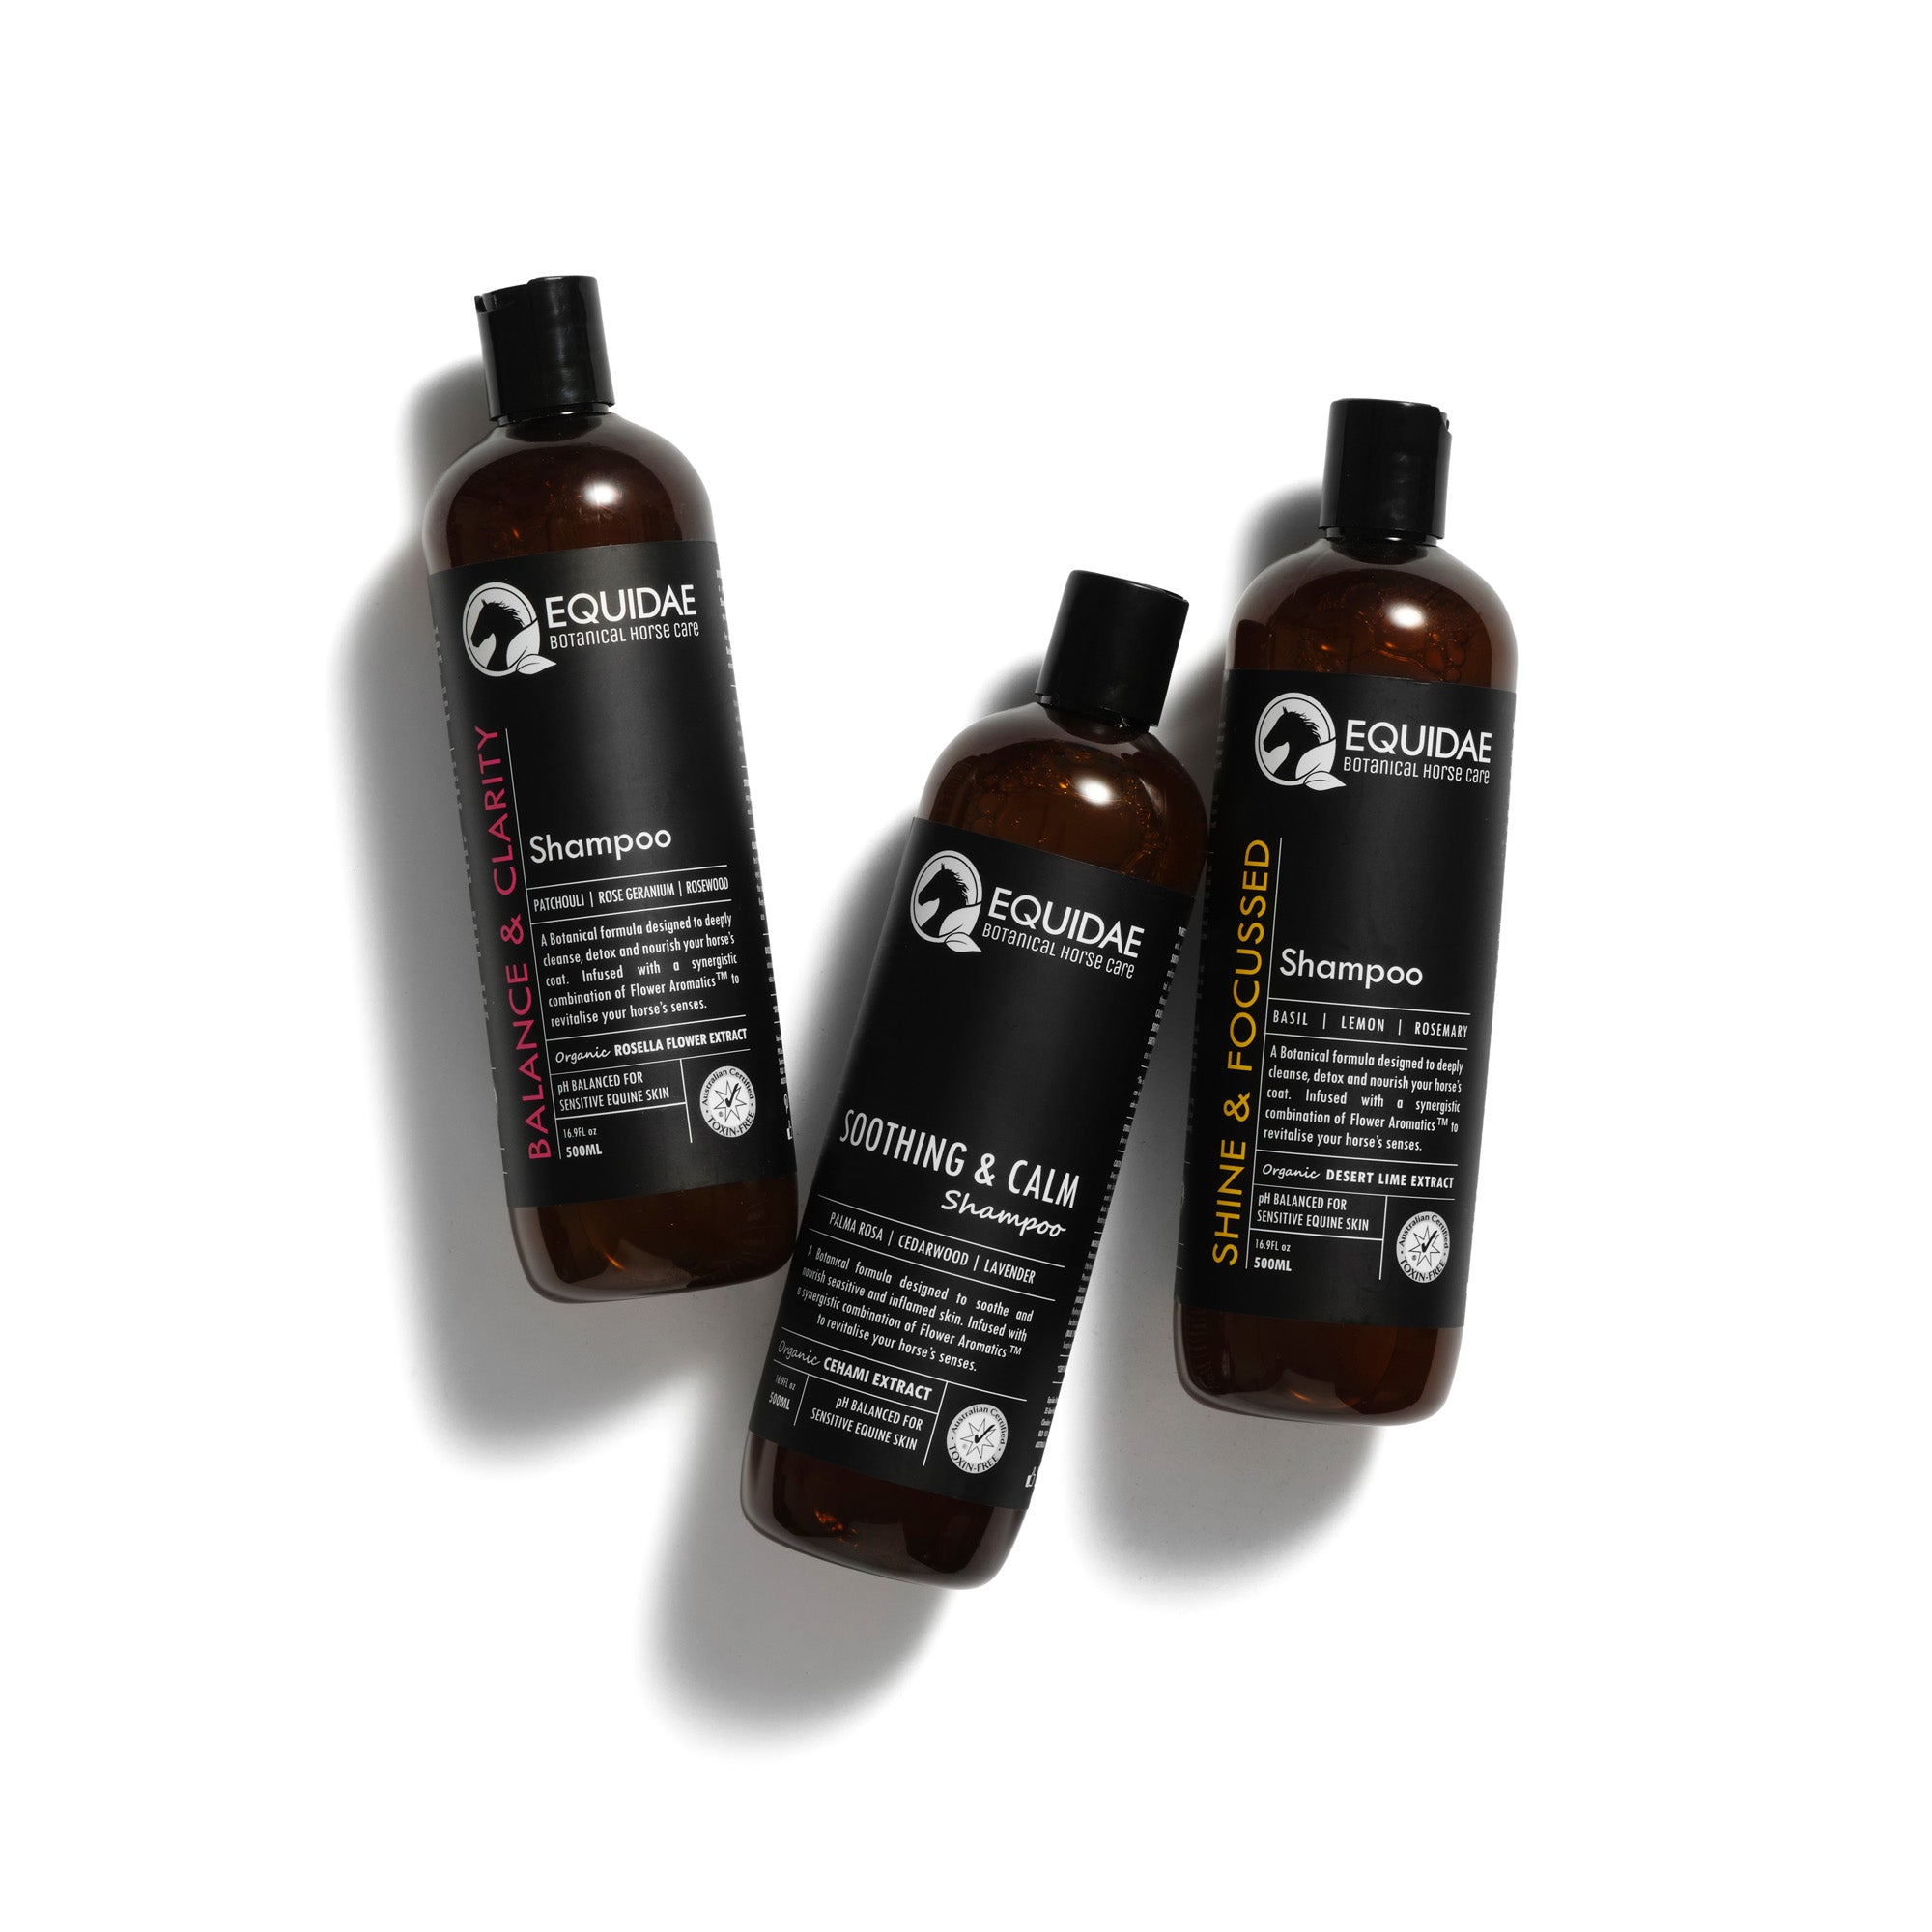 Three natural horse shampoos